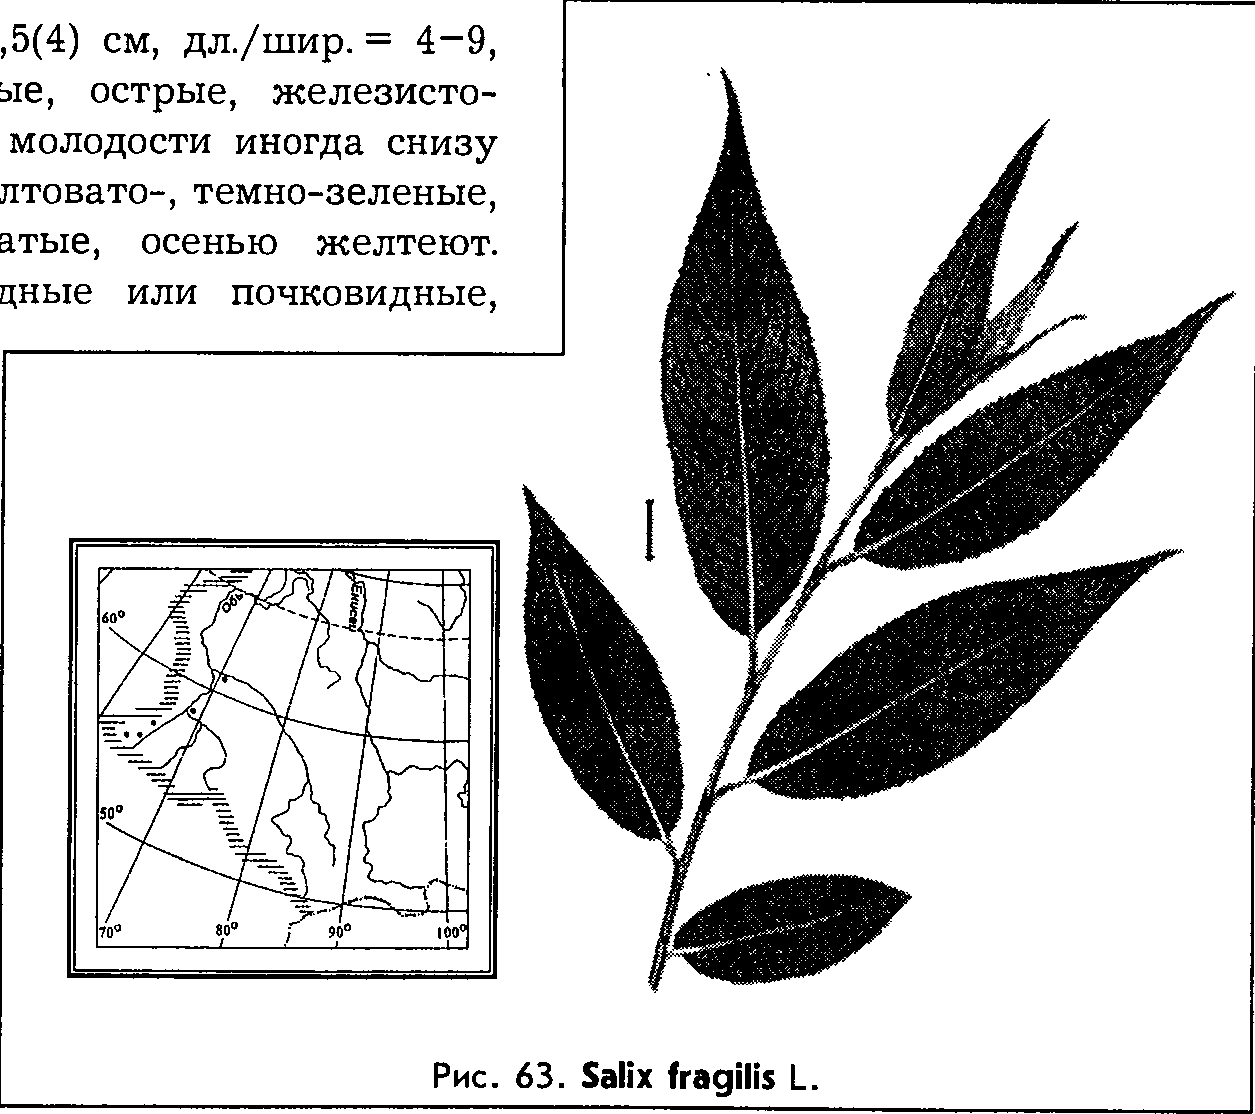 Salix fragilis L. — Ива ломкая (Ш) Salix-16